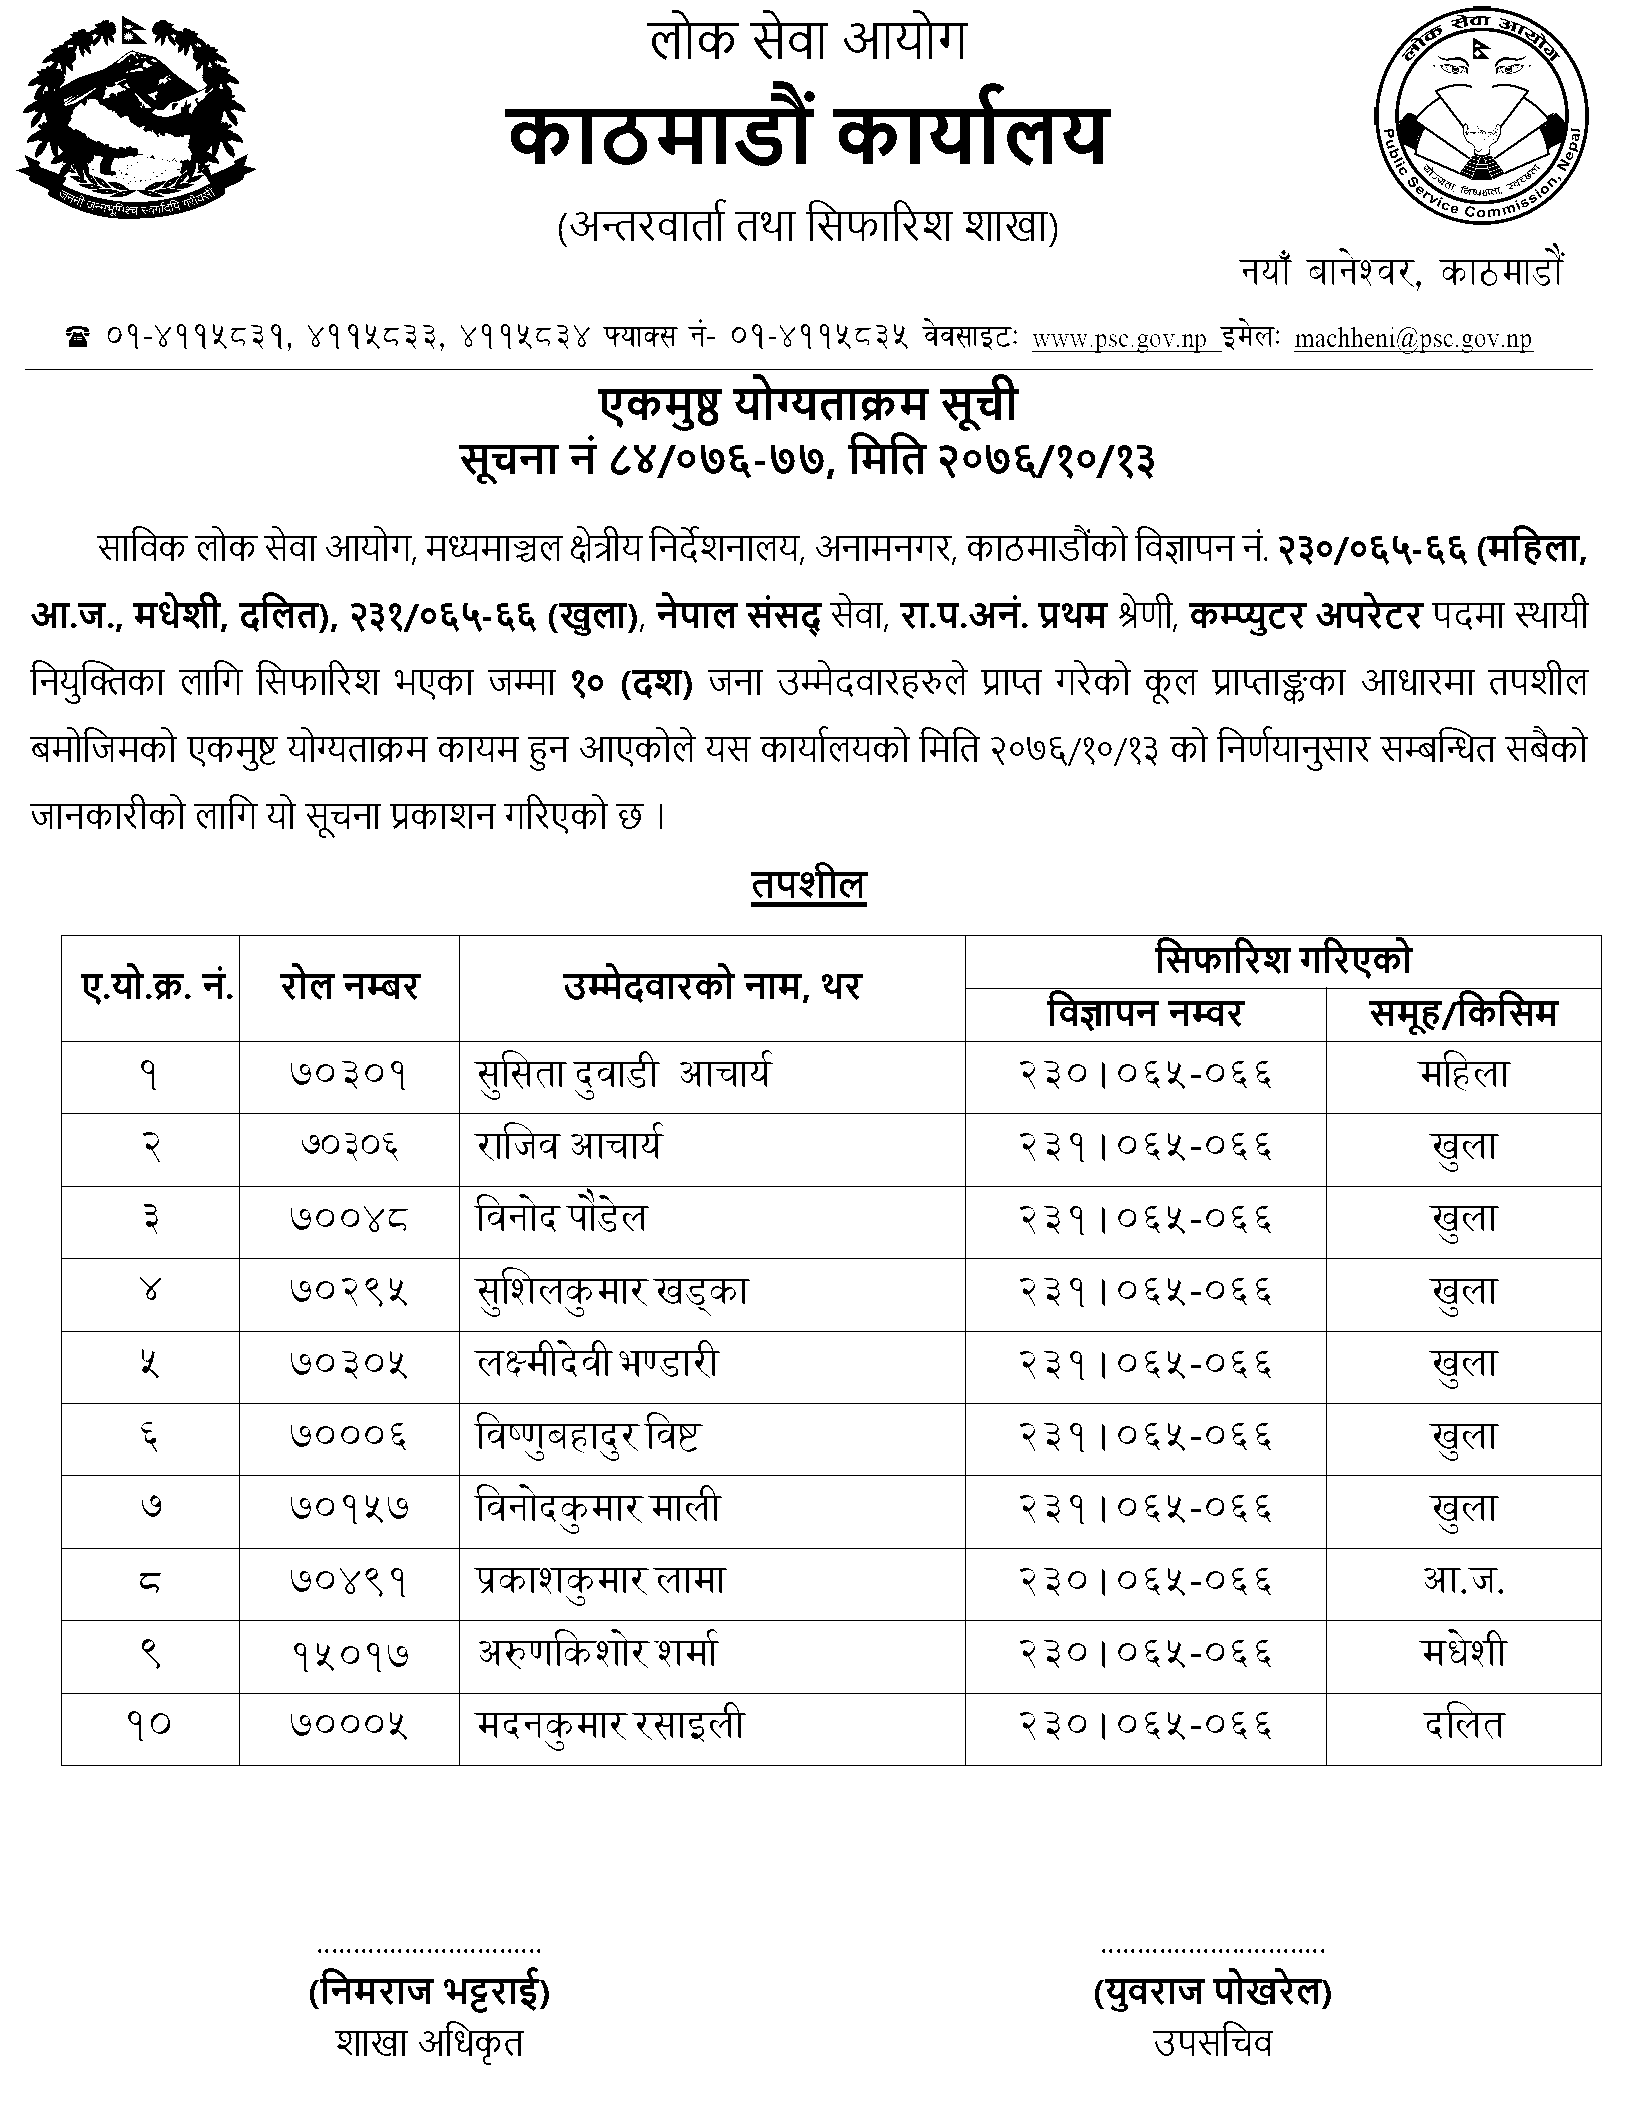 Lok Sewa Aayog Kathmandu Computer Operator Final Result and Recommendations